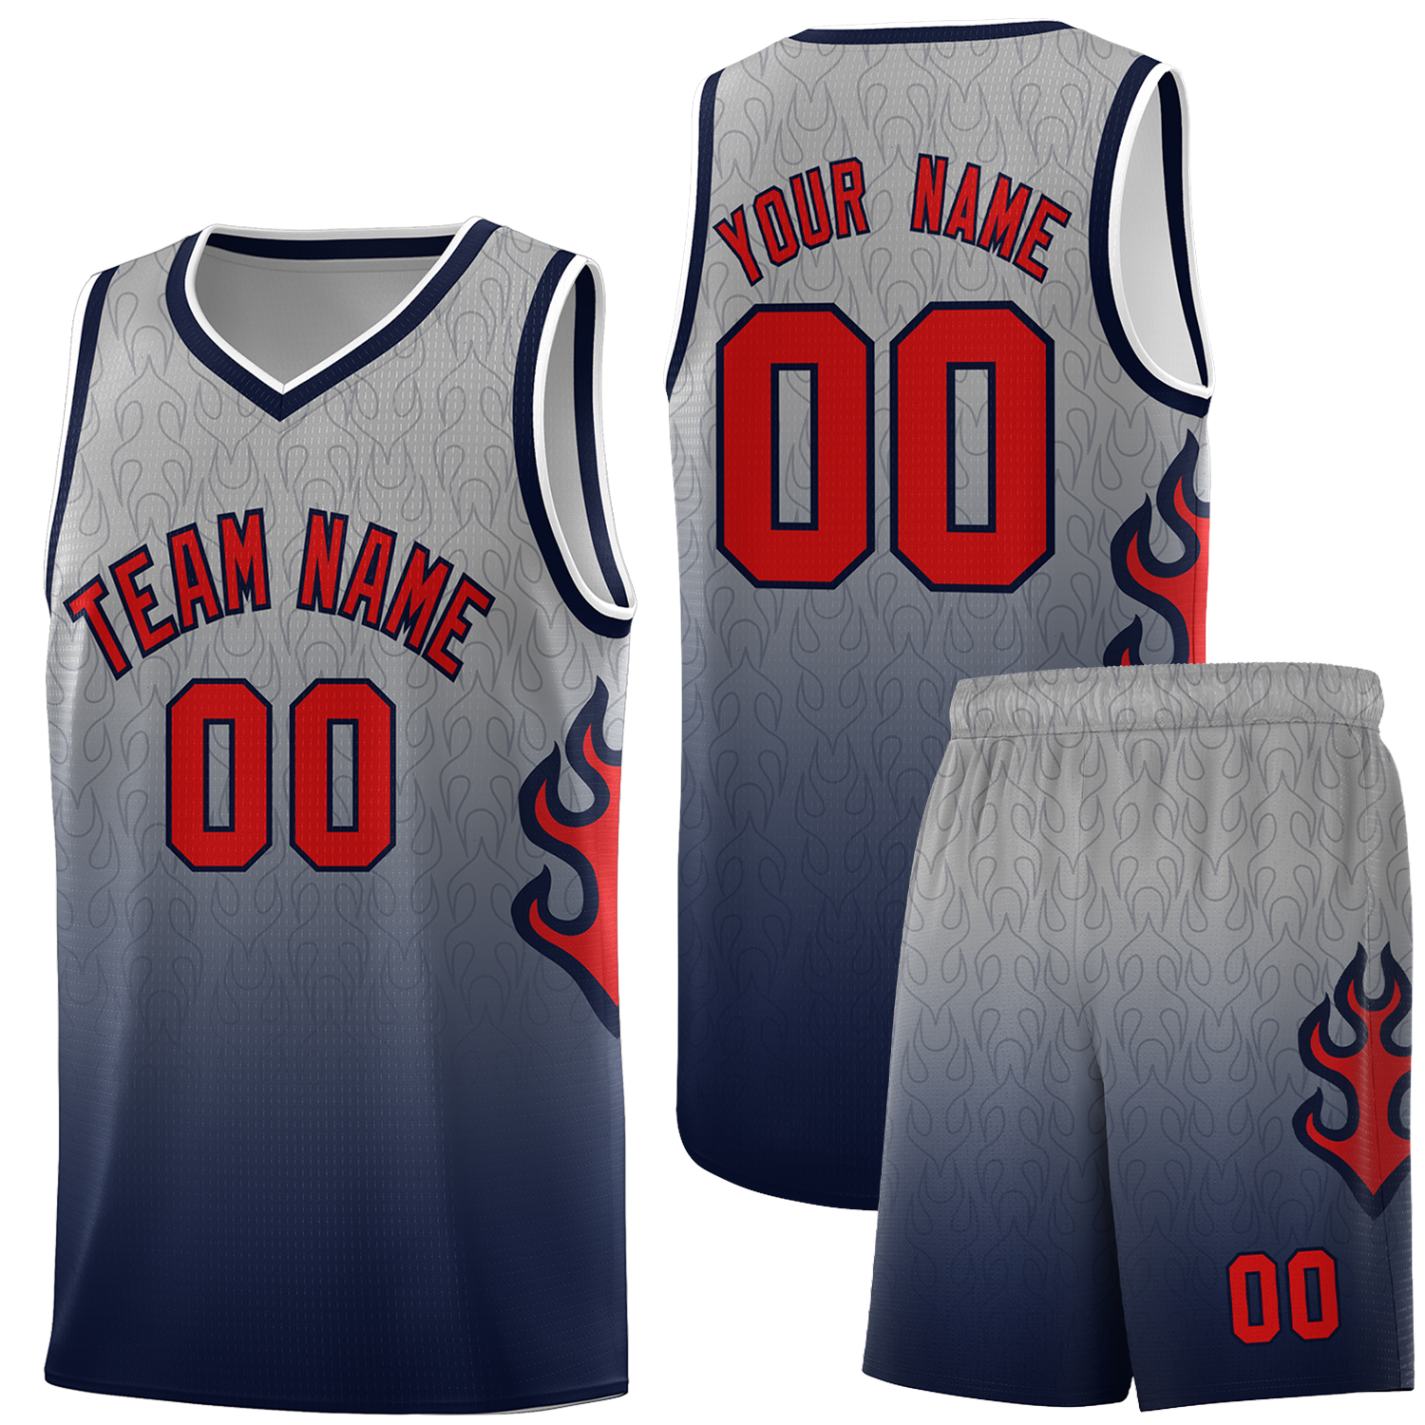 Custom Gray Navy-Red Flame Gradient Fashion Sports Uniform Basketball Jersey